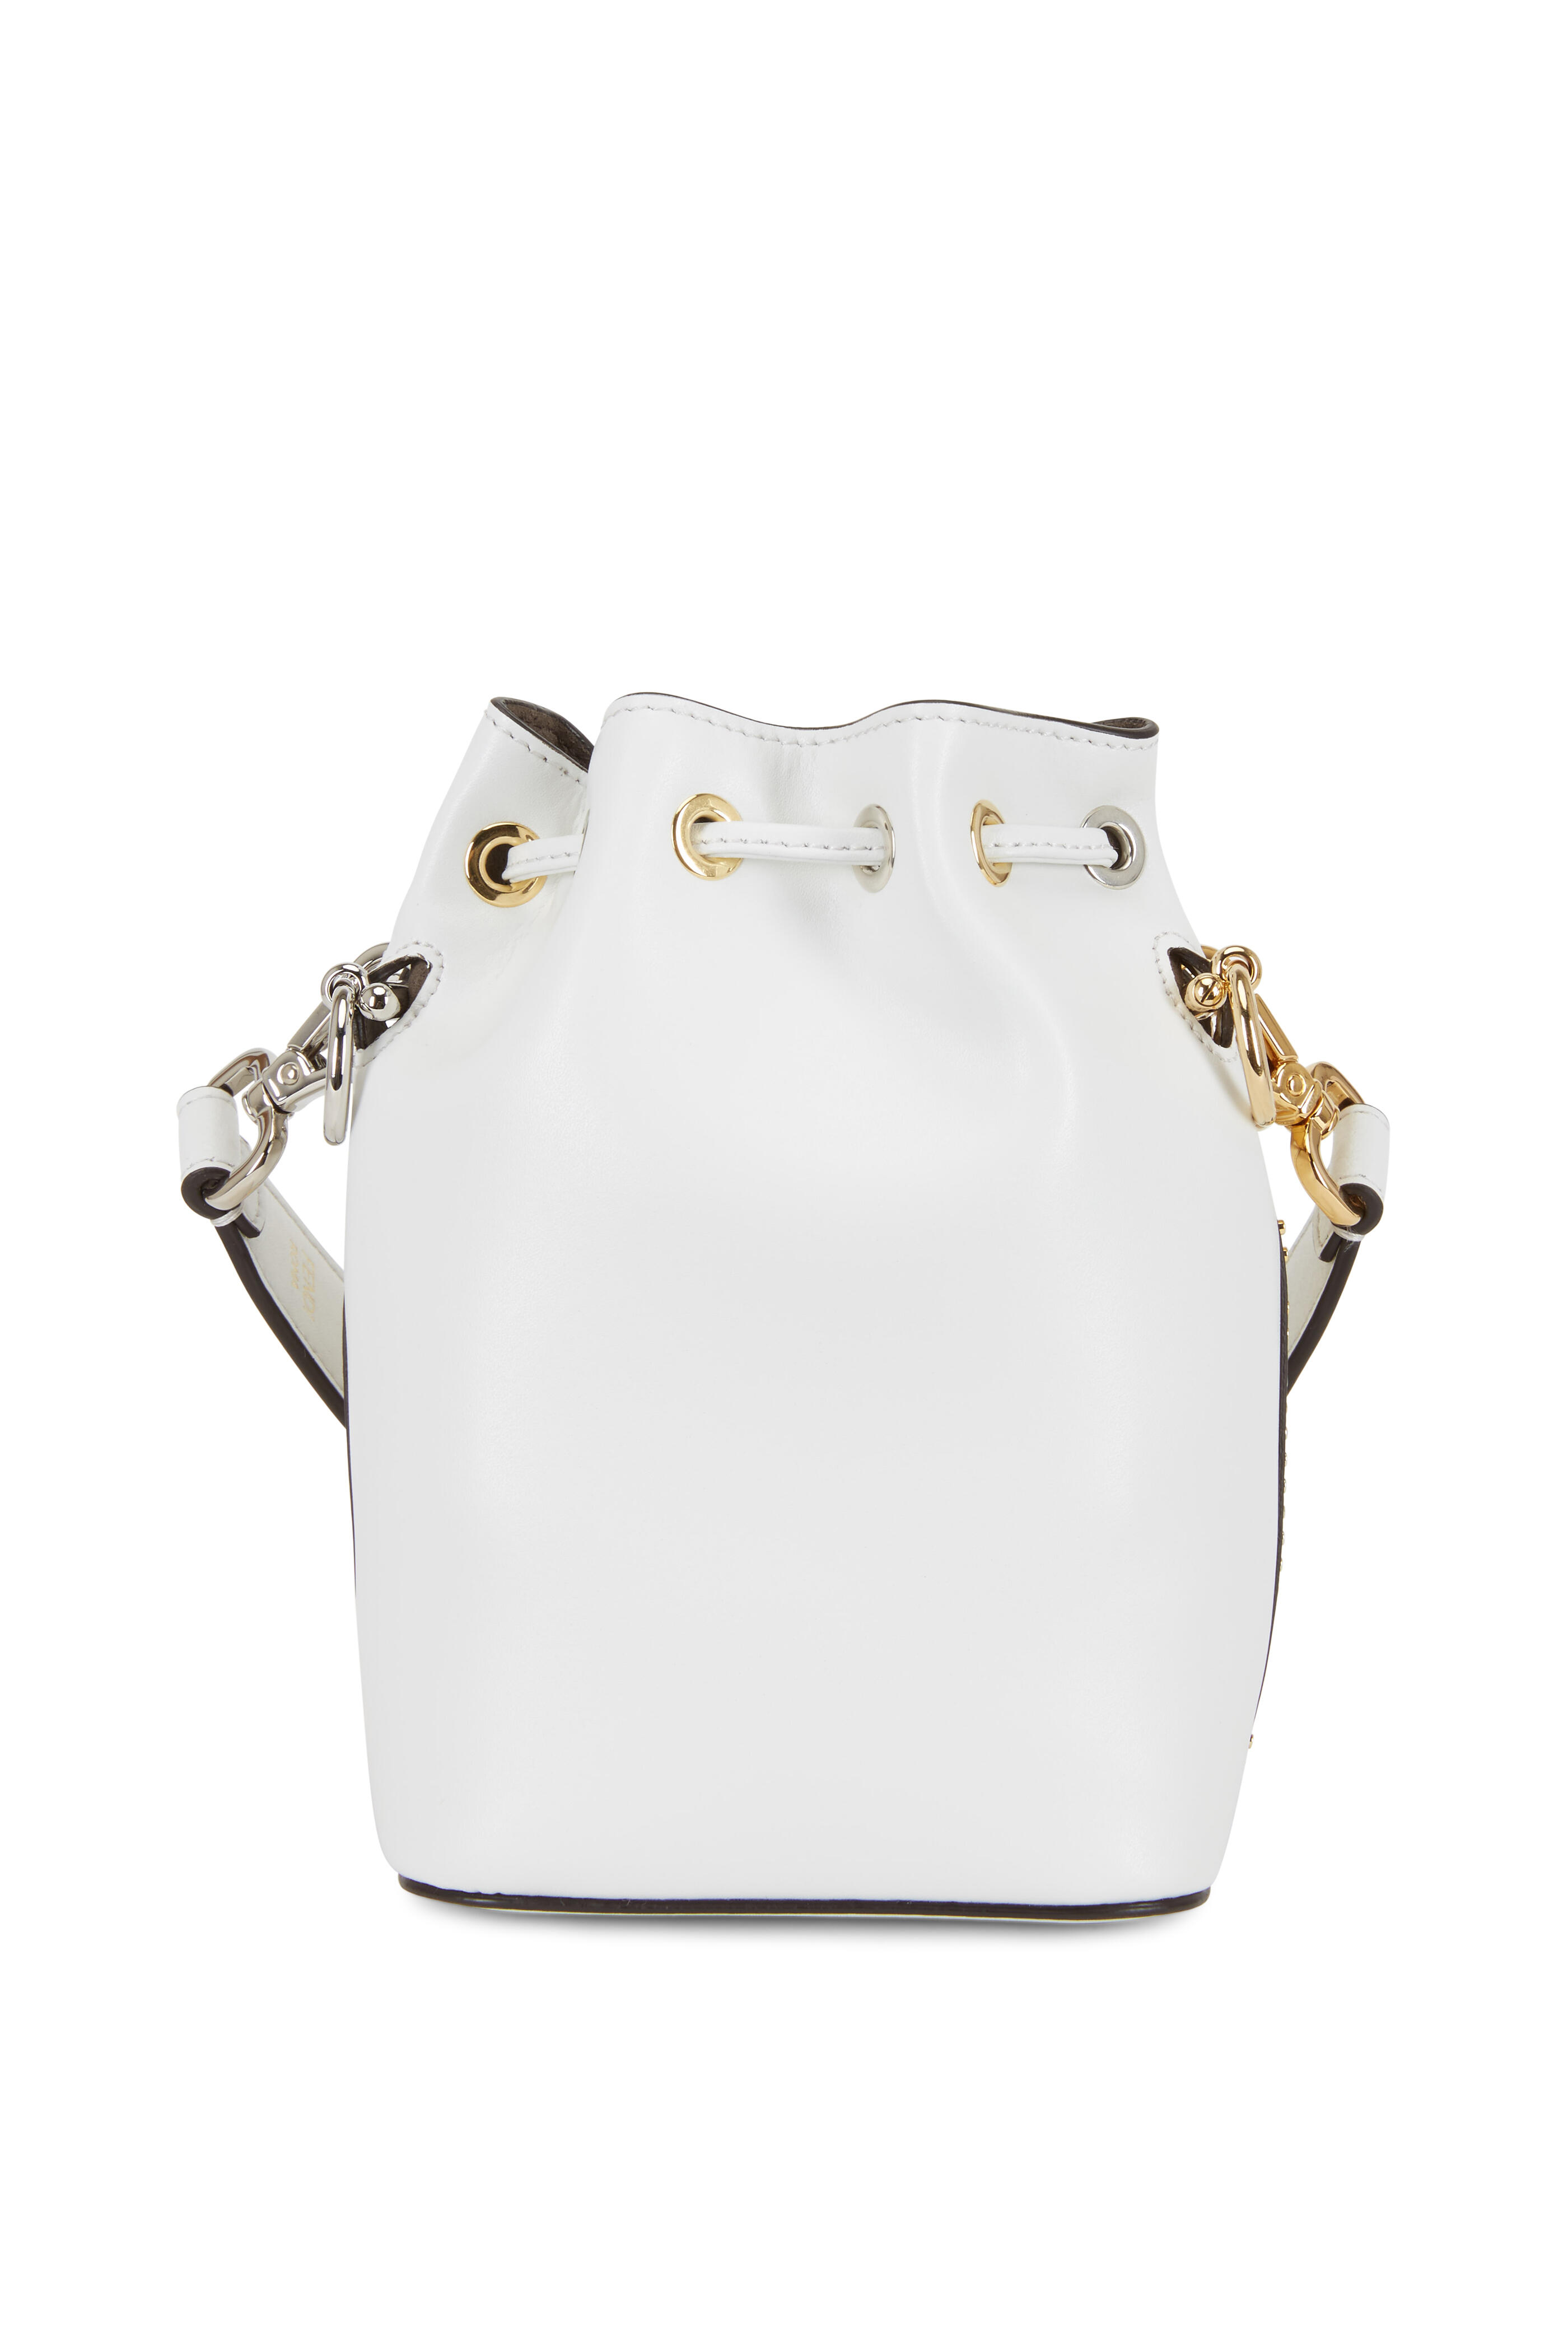 Fendi Mon Tresor Mini Bucket Bag in white leather and white-logo-printed  transparent PVC, featuring gold-tone hardware, bla…